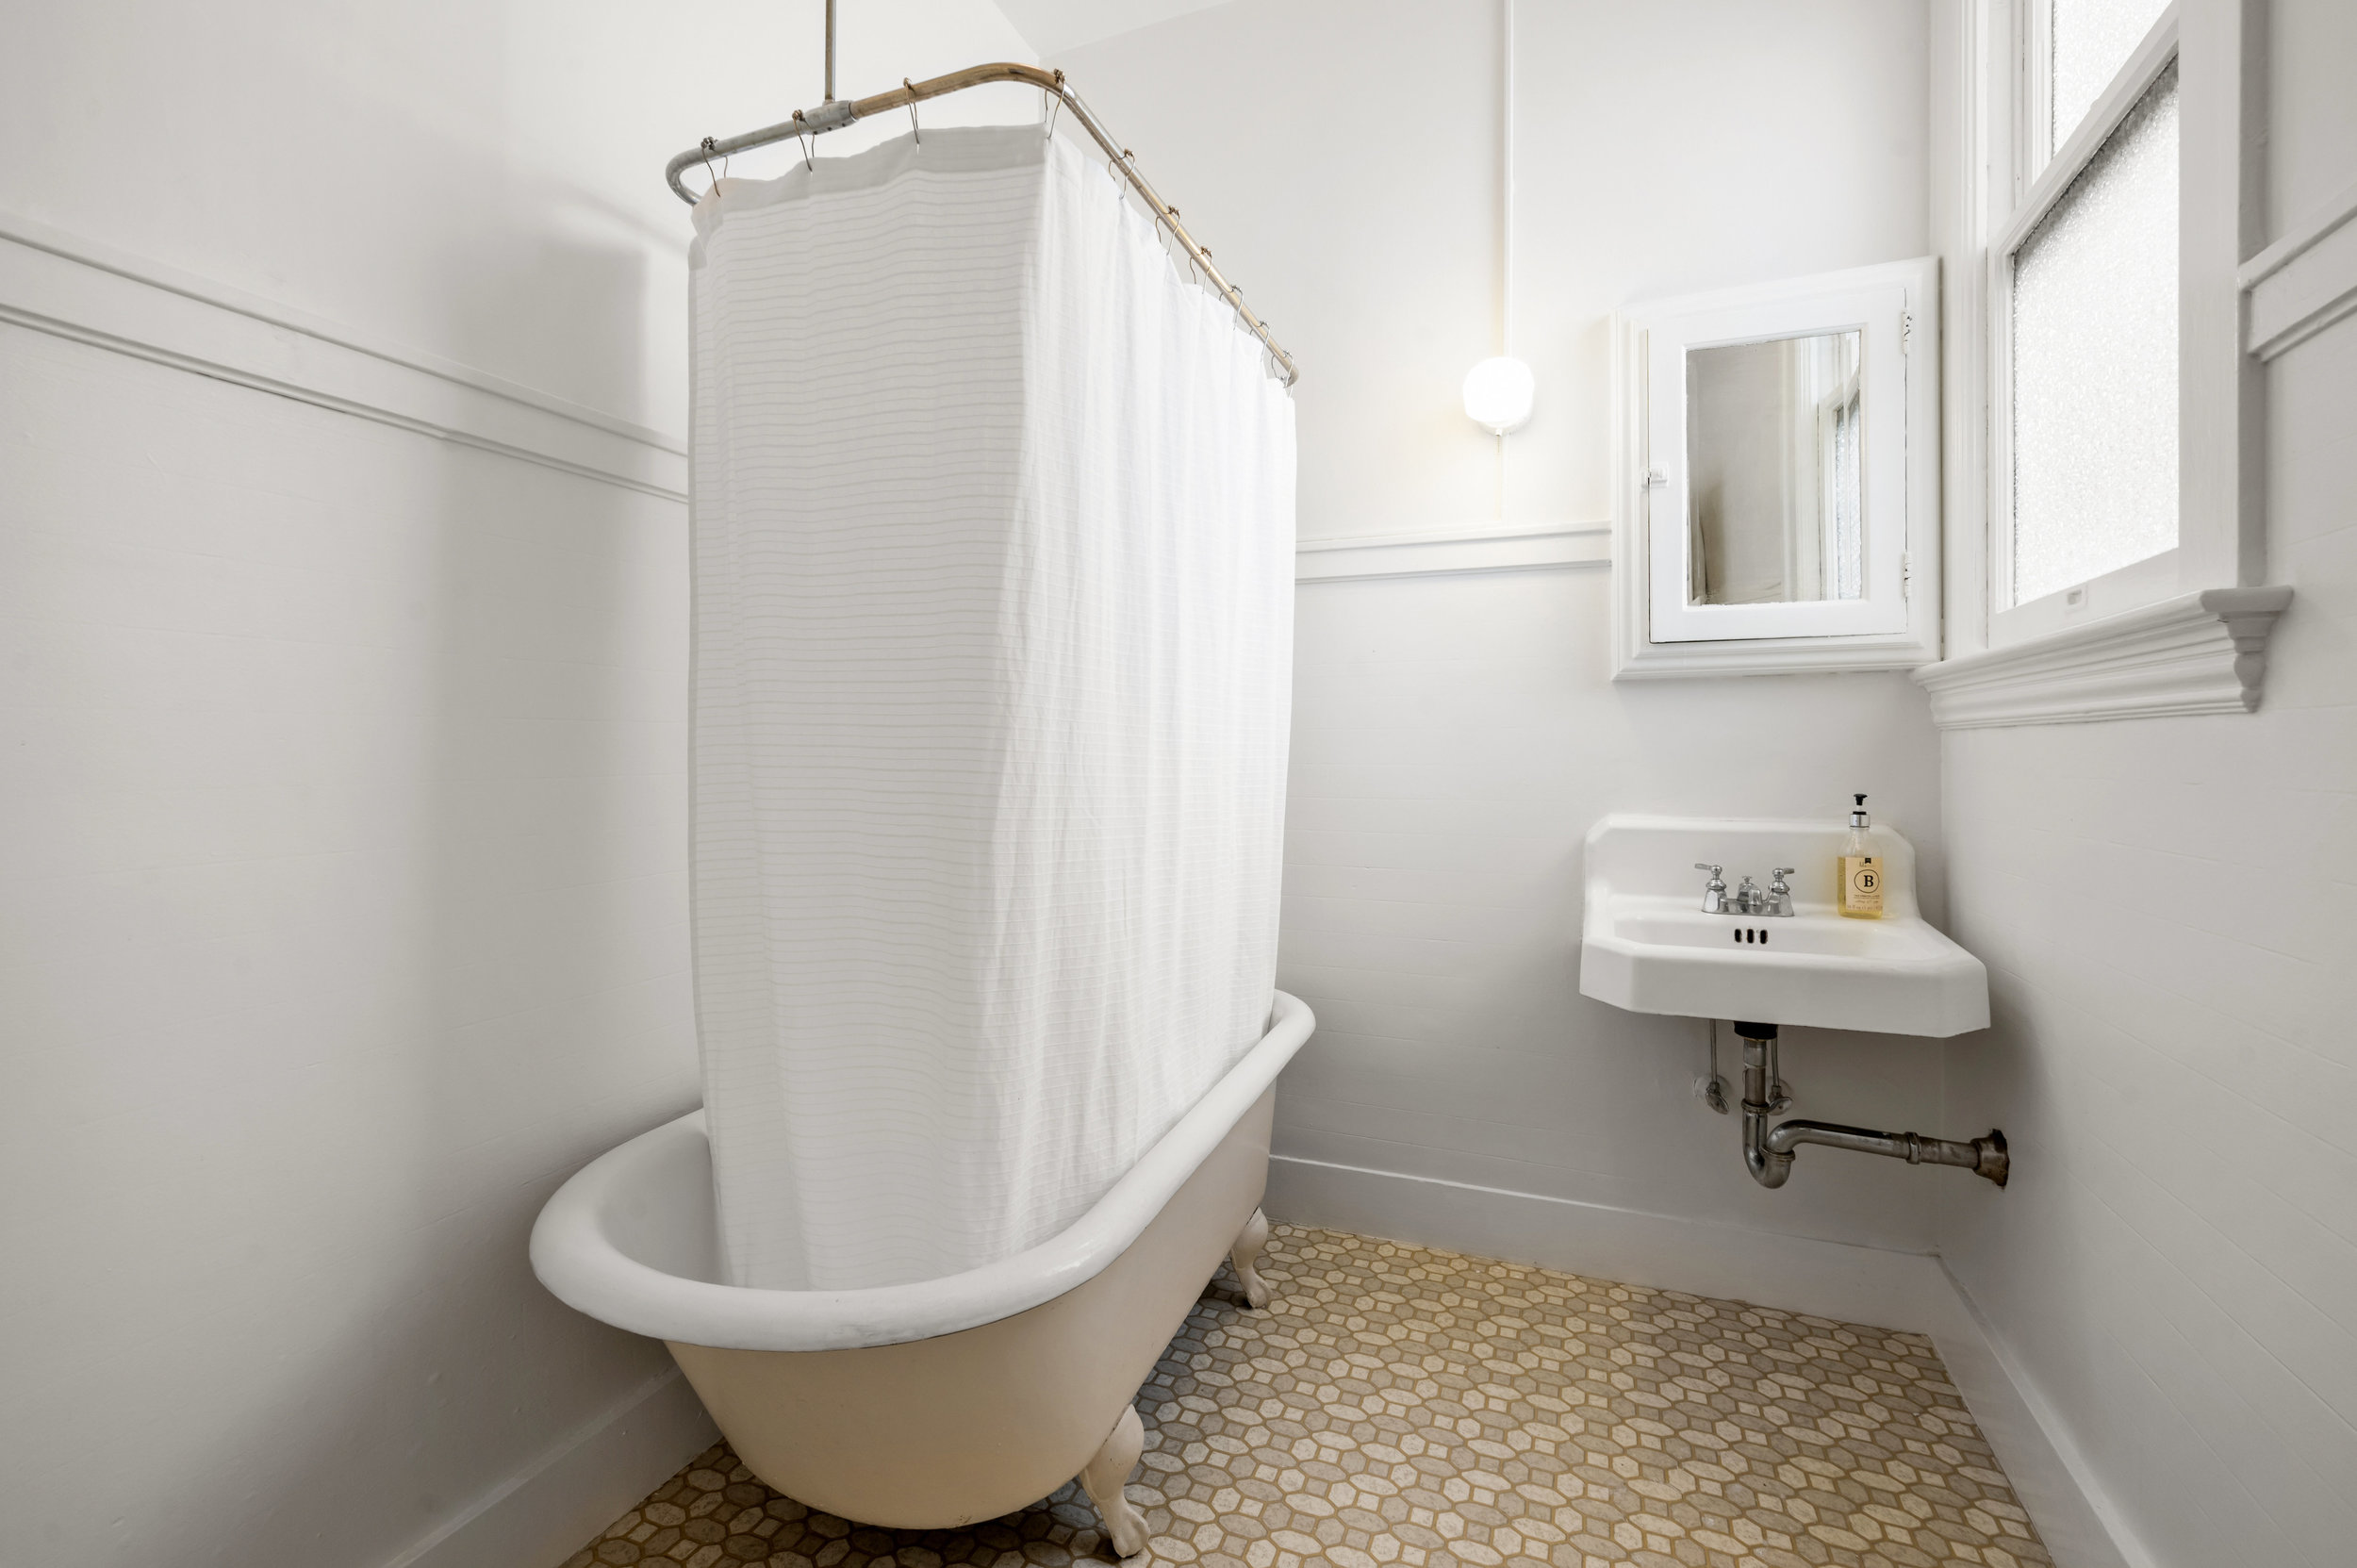 Property Photo: Bathroom with free-standing clawfoot bath tub